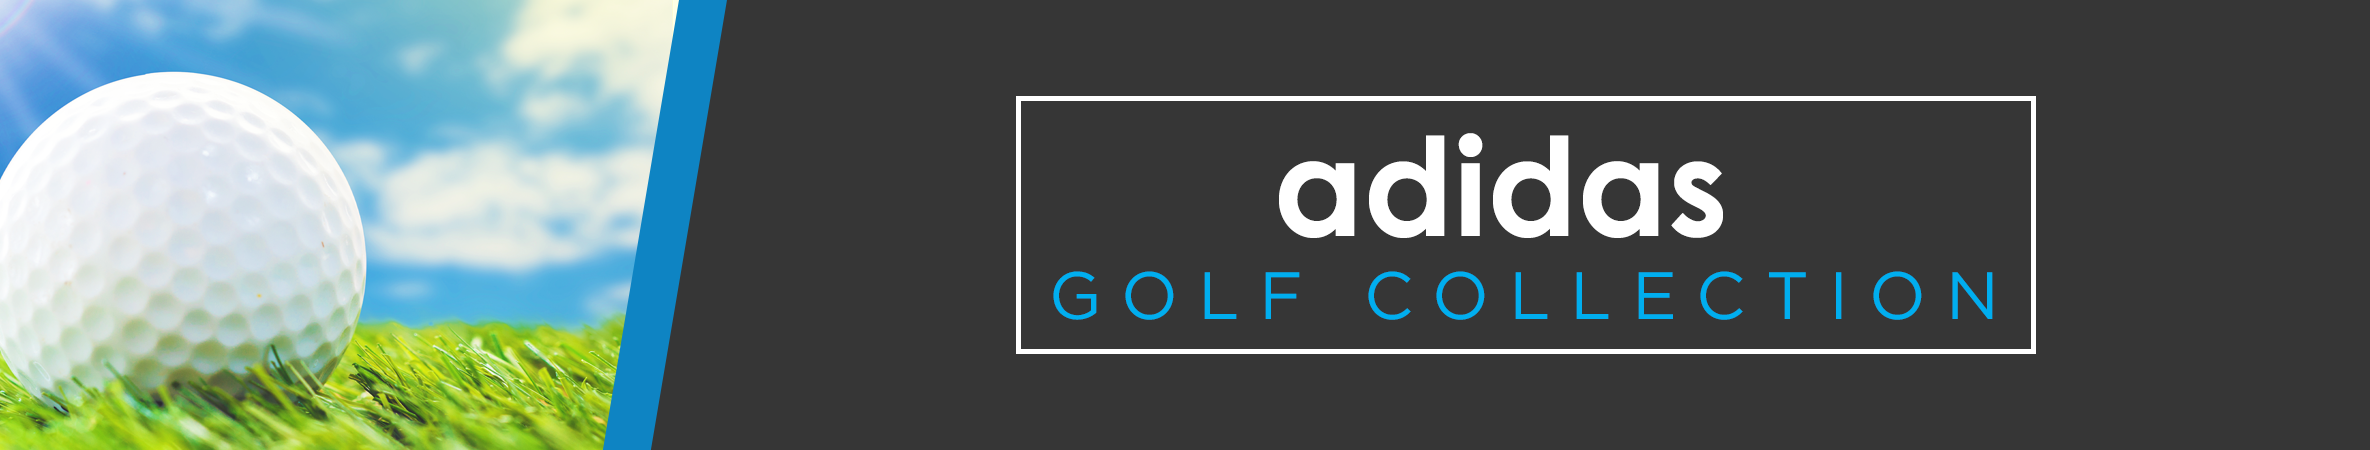 Collection adidas Golf !